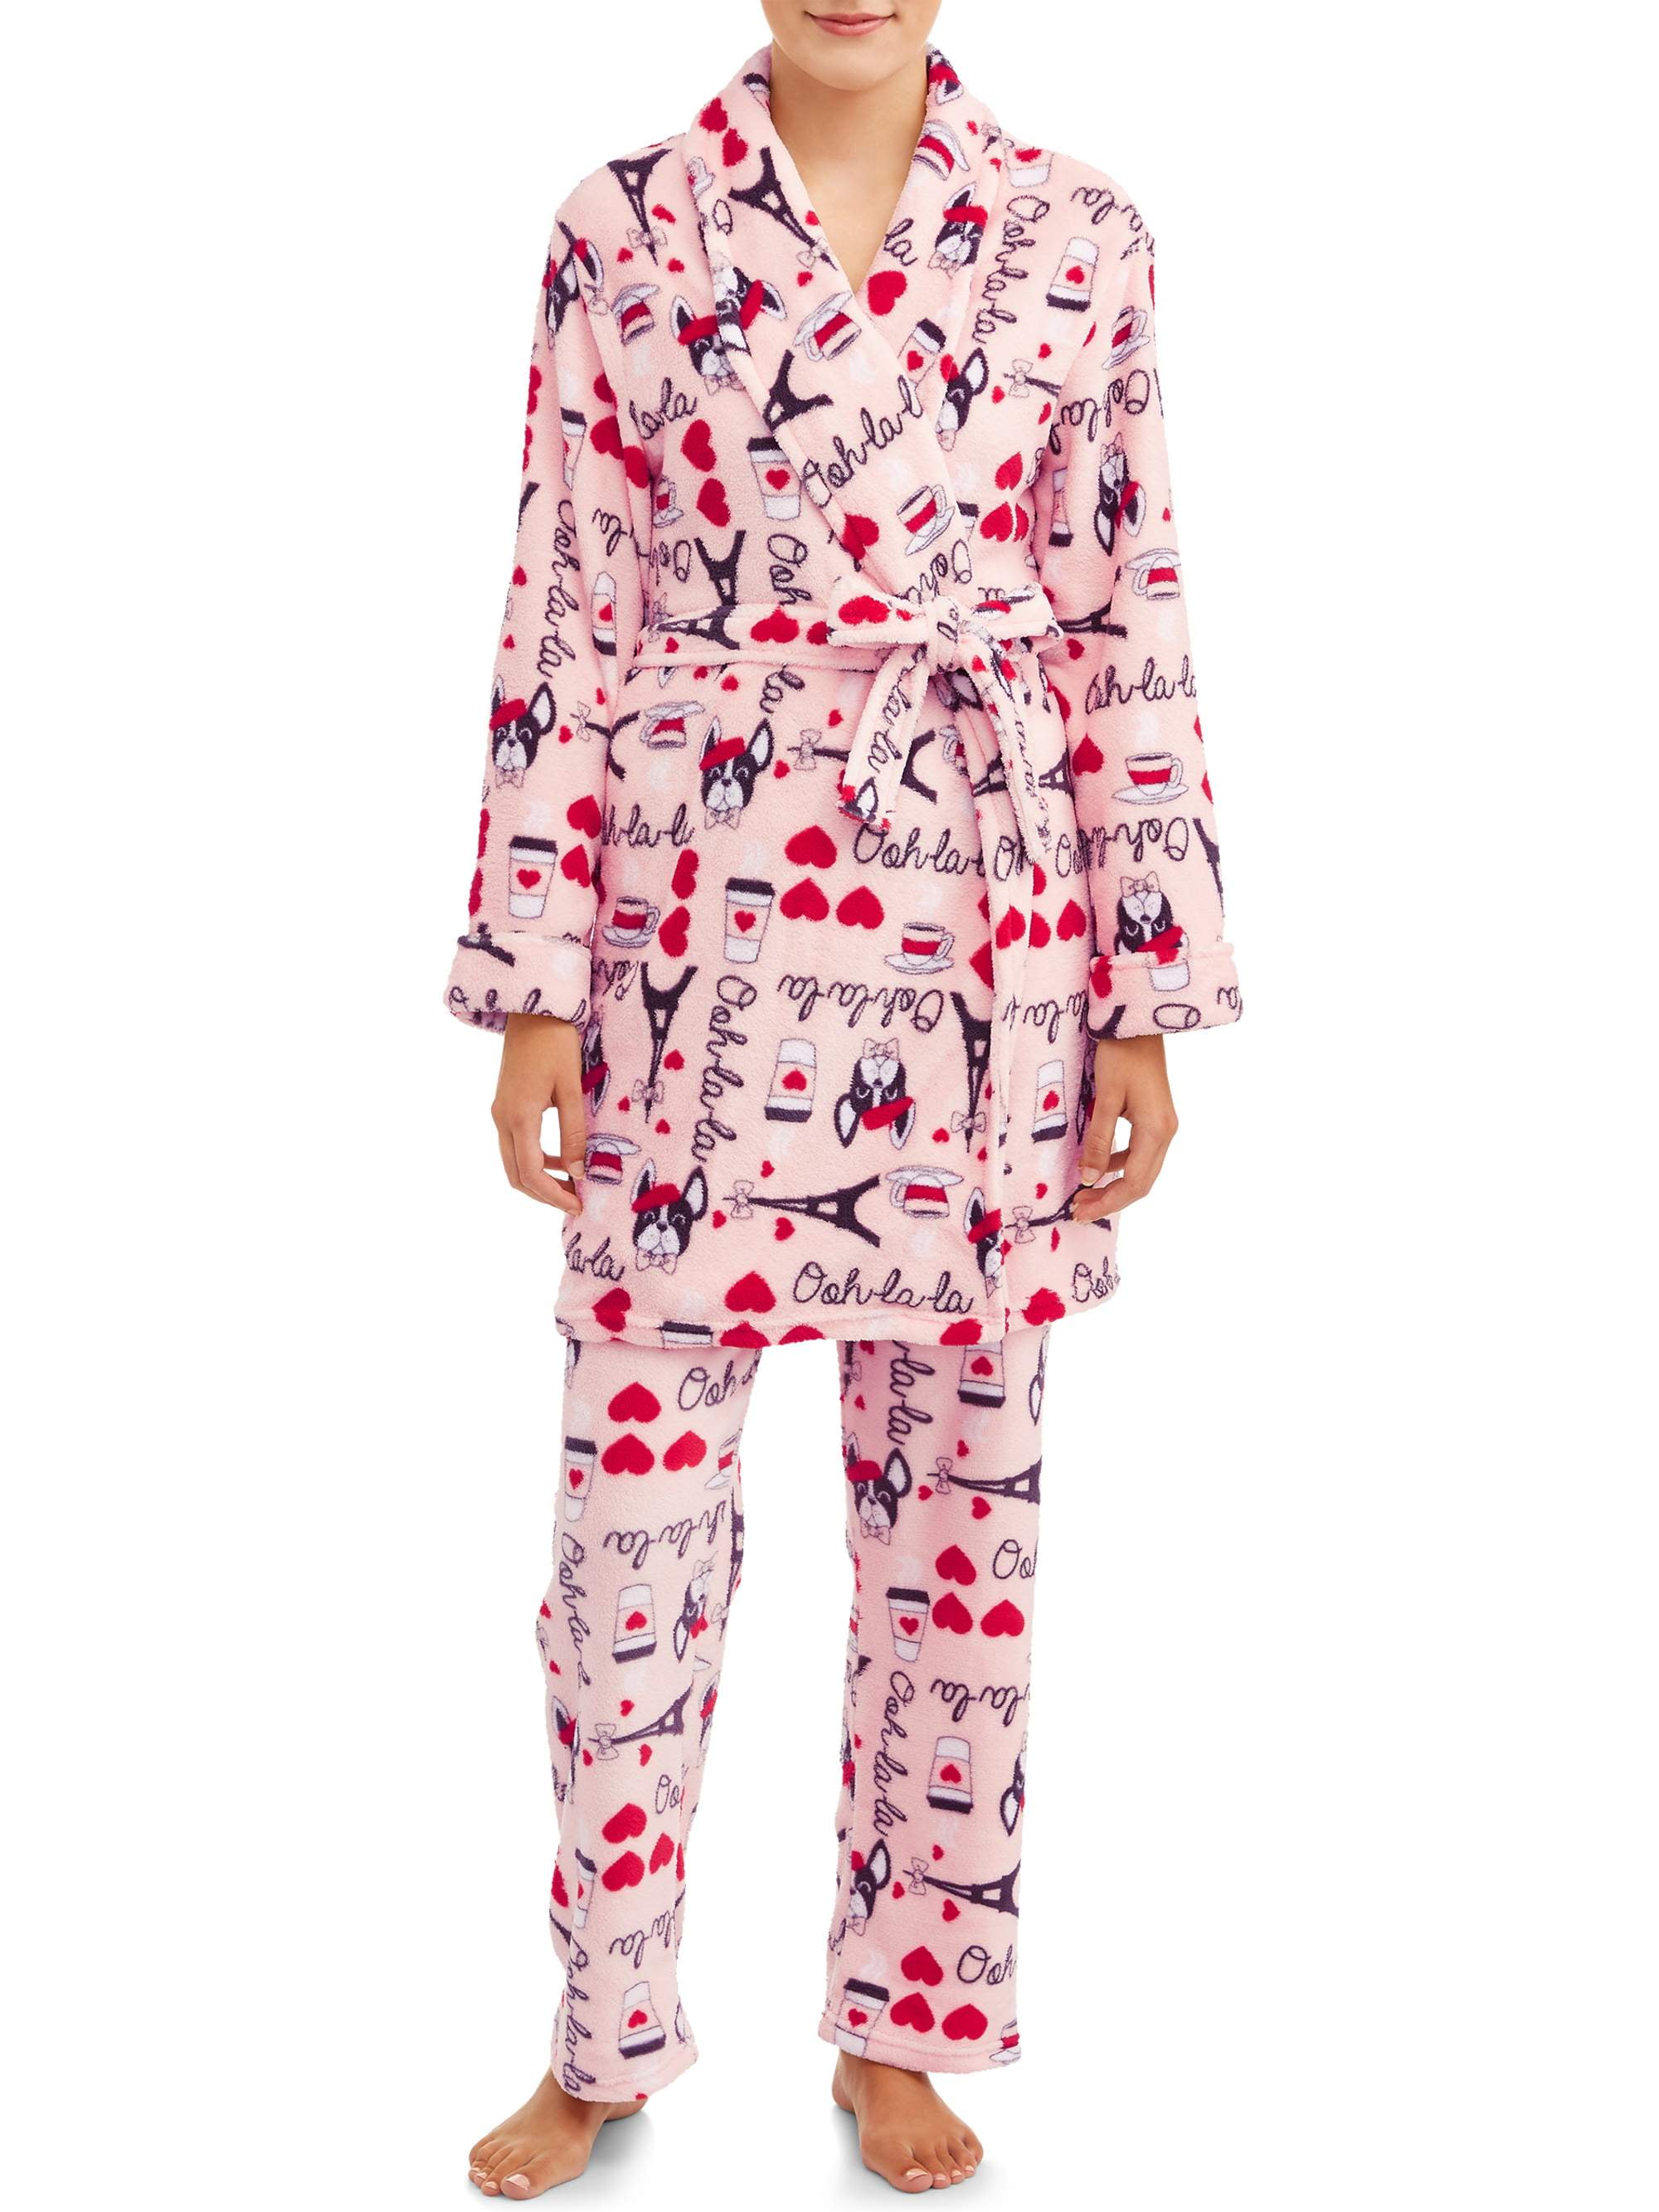 Kids Bathrobes Sleepwear Nightgowns Soft Pajamas Flannel Toddler Sleep Robe 